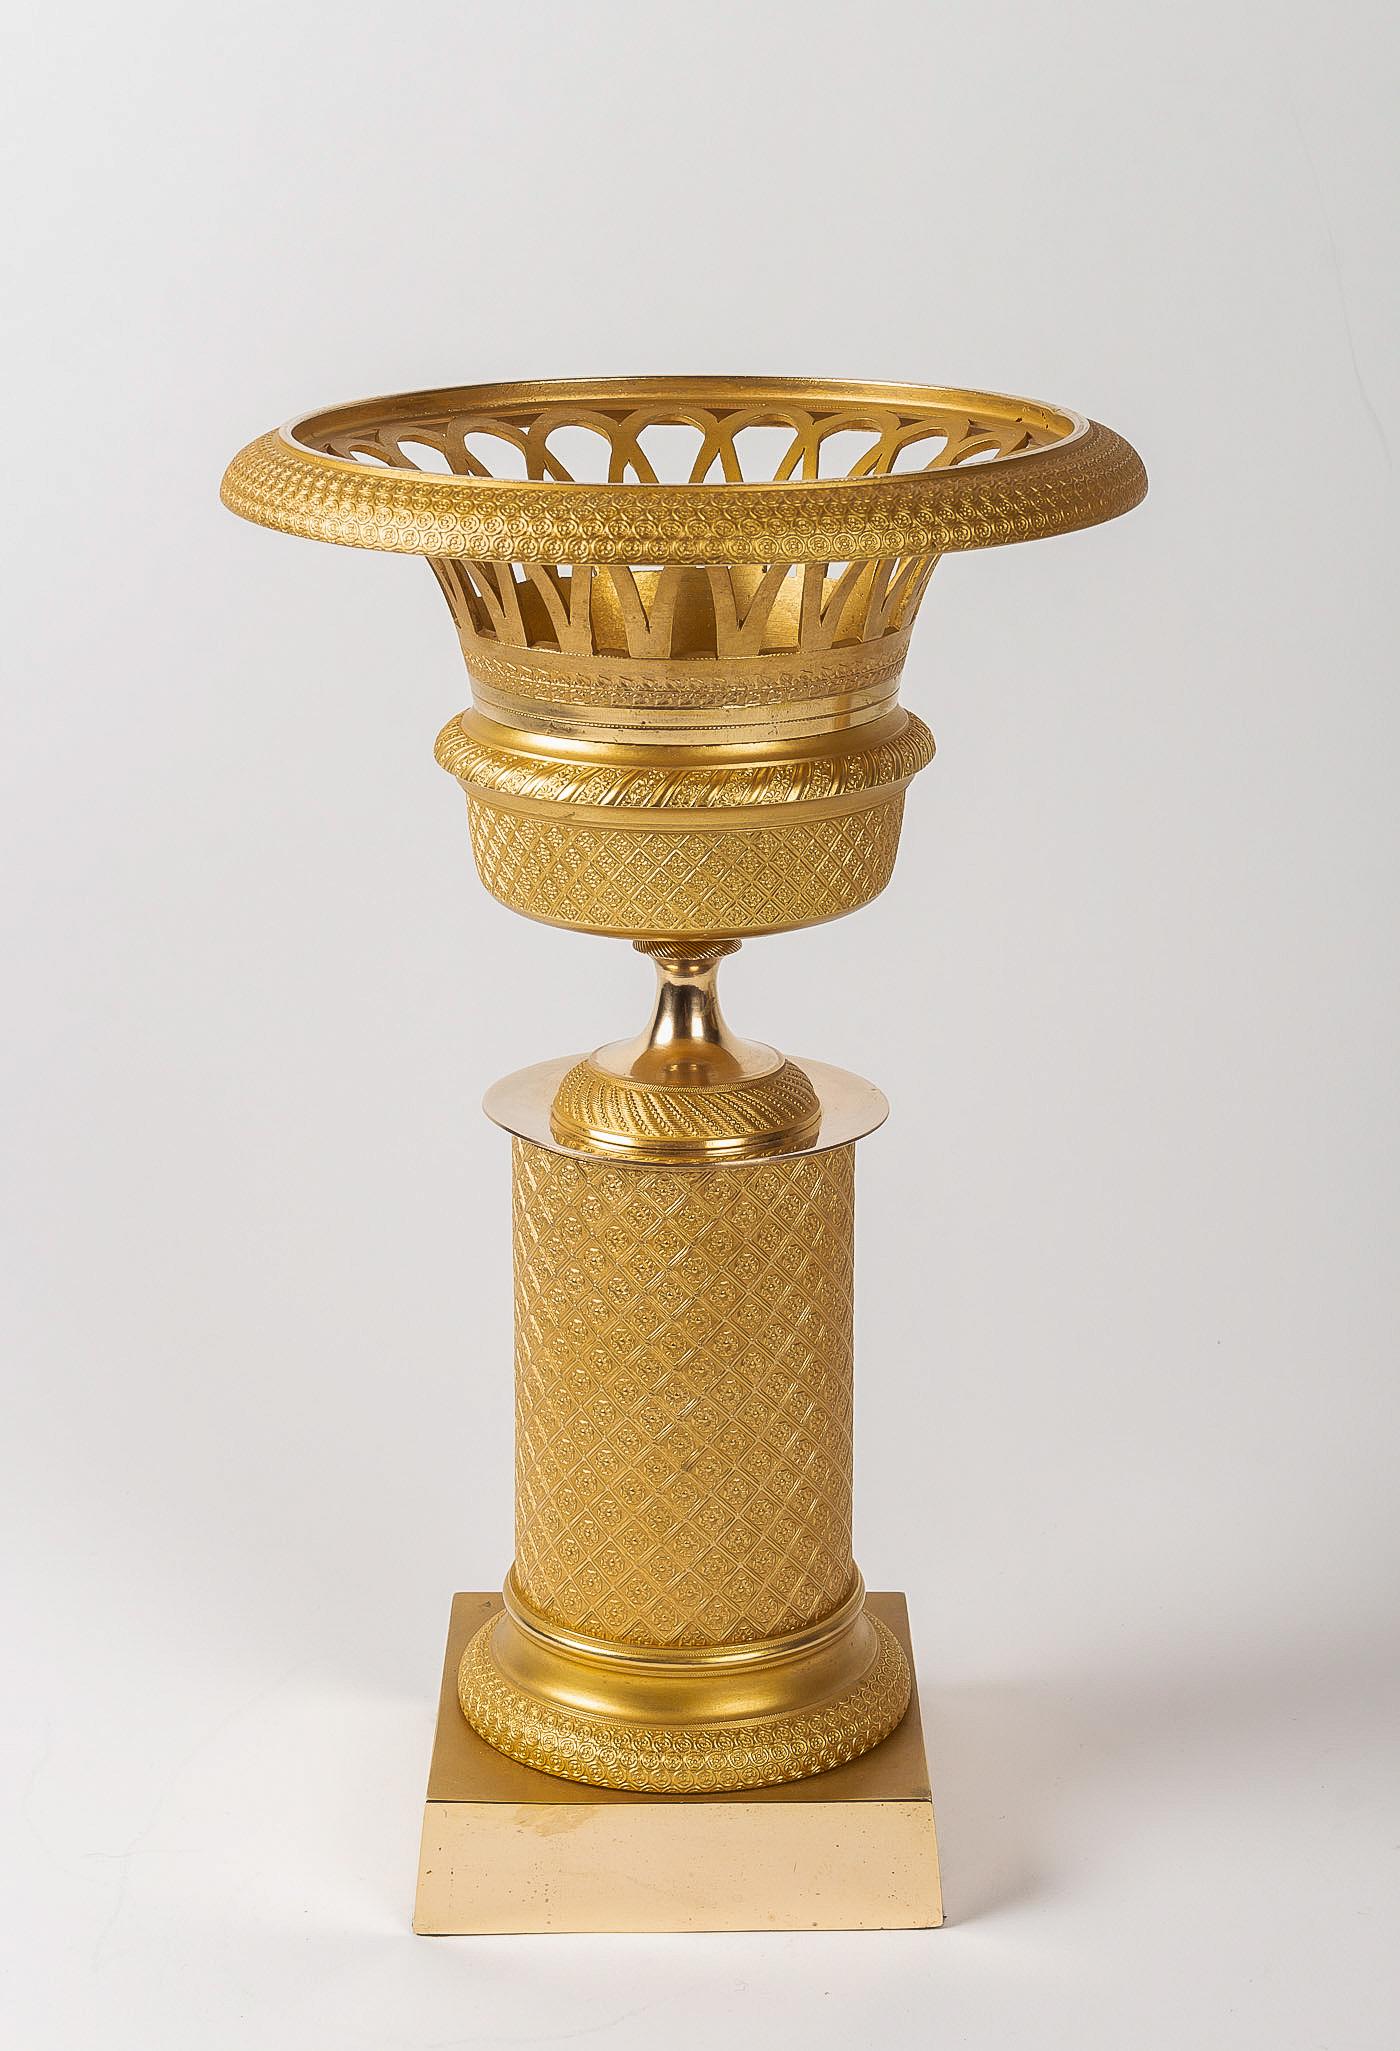 19th Century French Restoration Period Pair of Gilt-Bronze Cups, circa 1815-1830